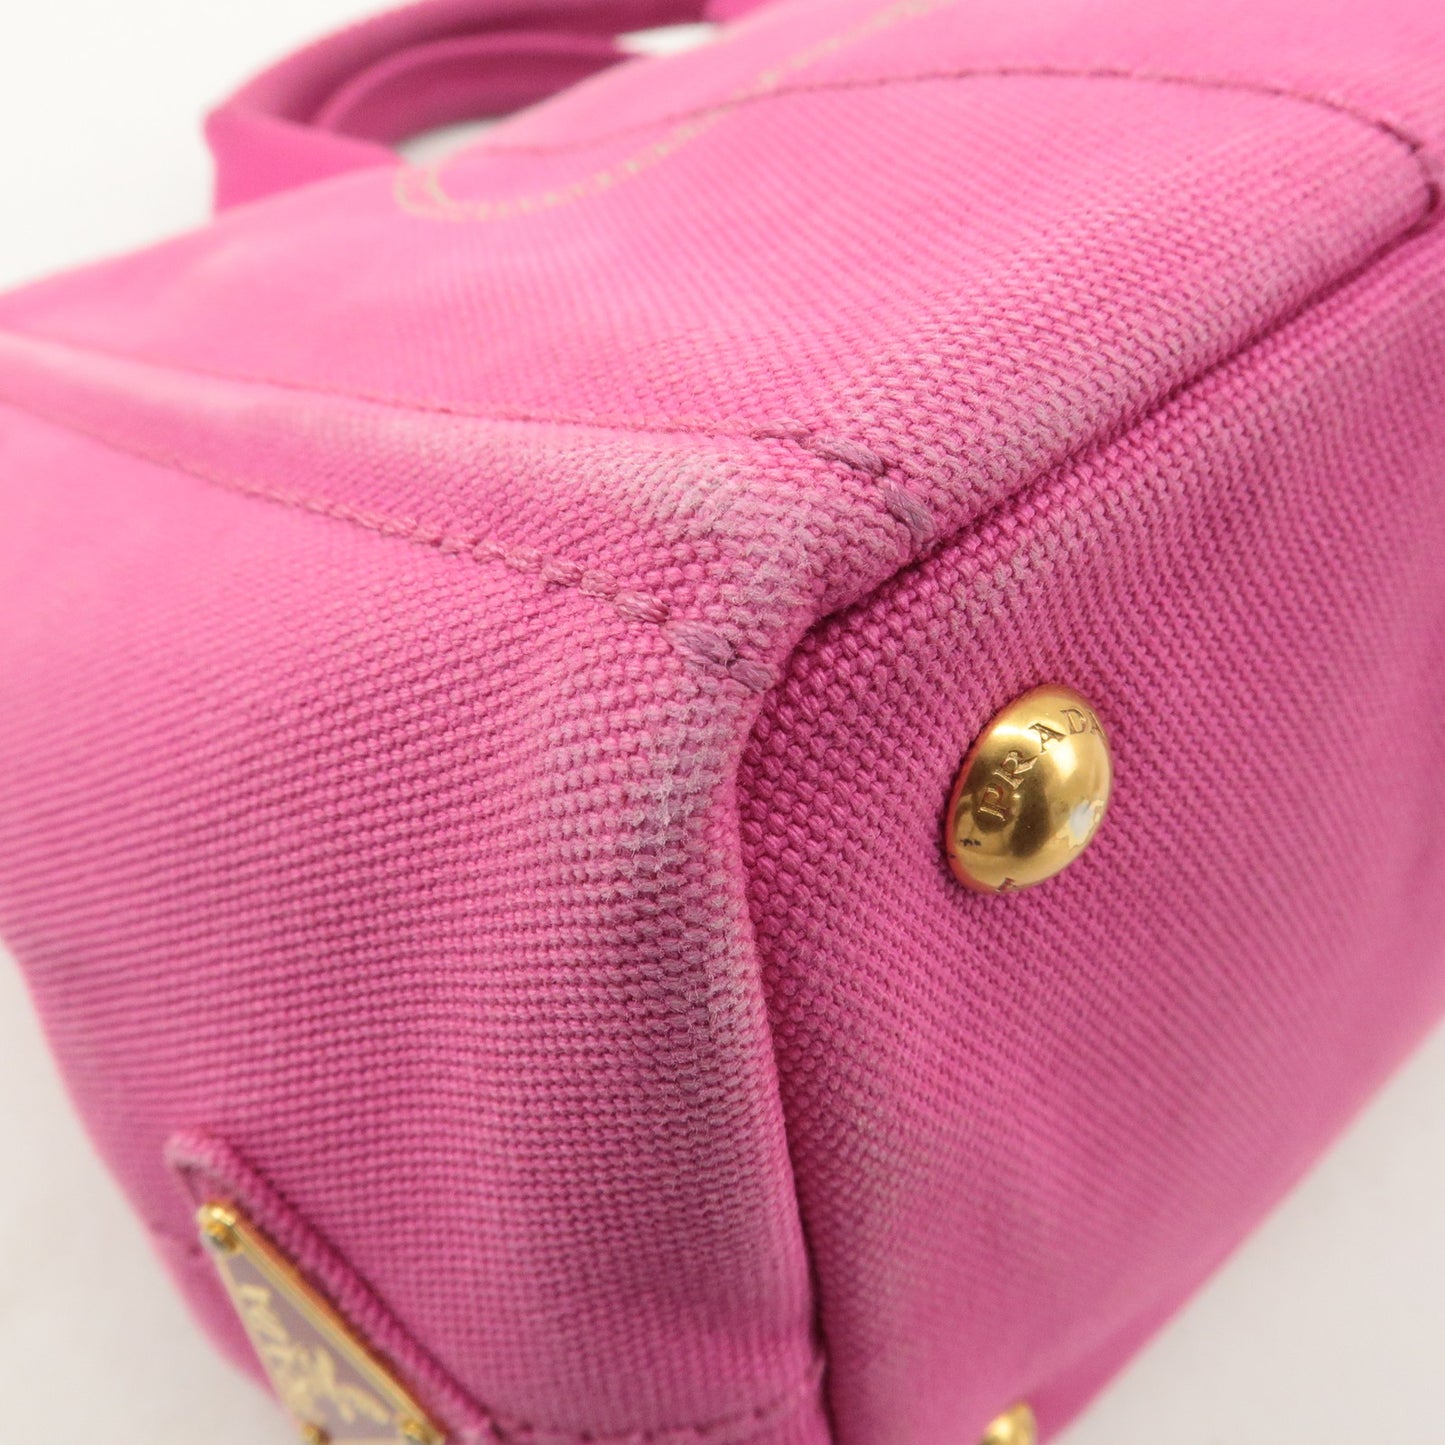 PRADA Canapa Mini Canvas 2Way Bag Hand Bag Pink B2439G